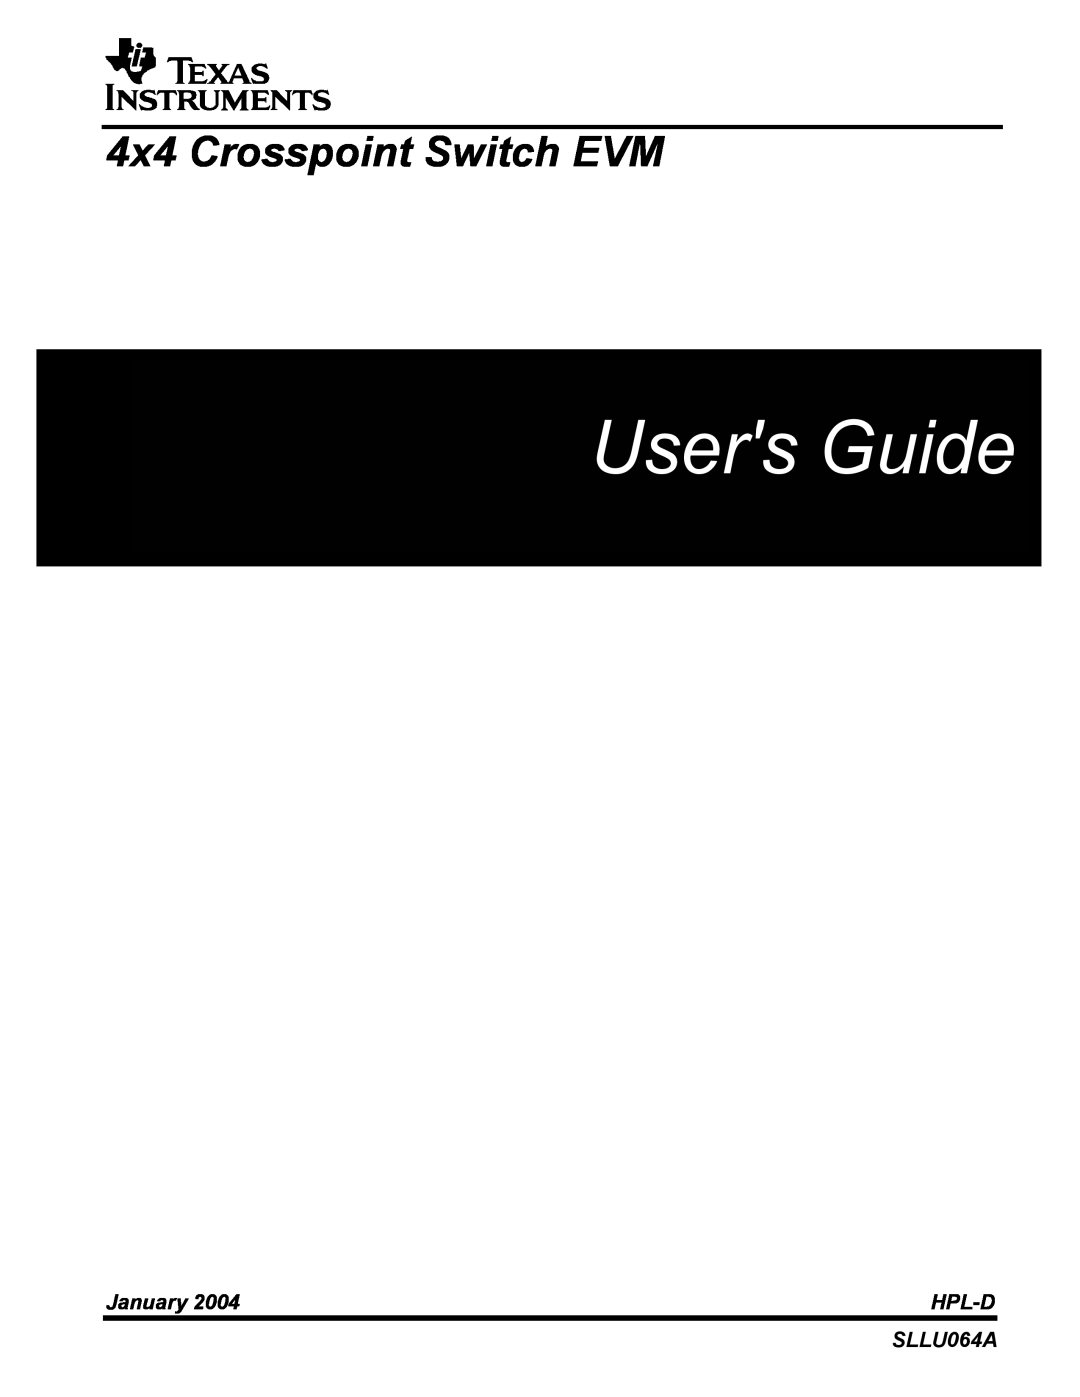 Texas Instruments HPL-D SLLU064A manual Users Guide, 4x4 Crosspoint Switch EVM, January, Hpl-D 